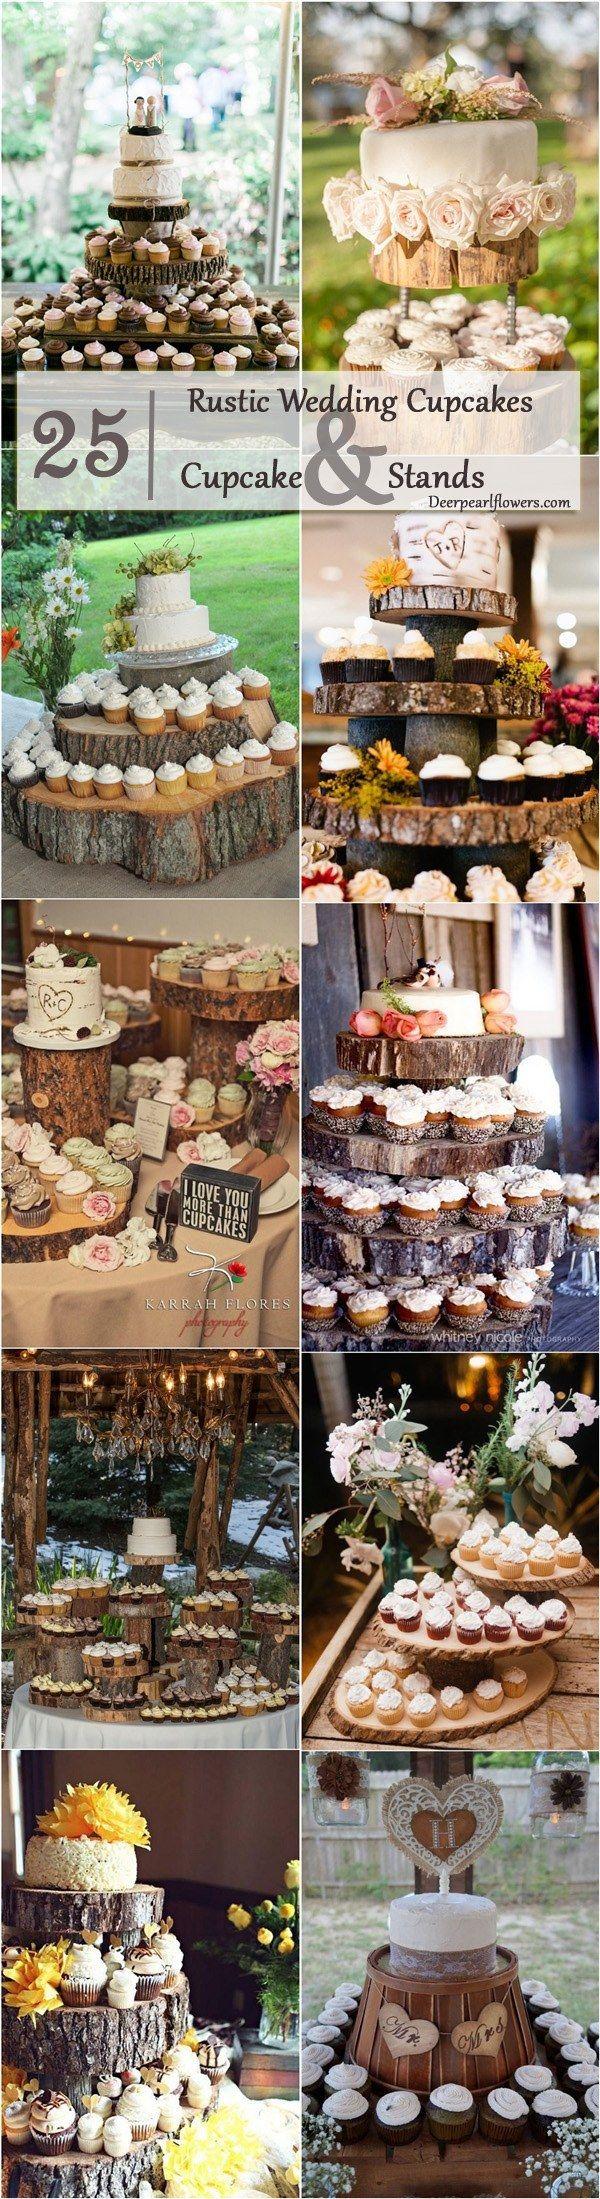 Wedding - 25 Amazing Rustic Wedding Cupcakes & Stands